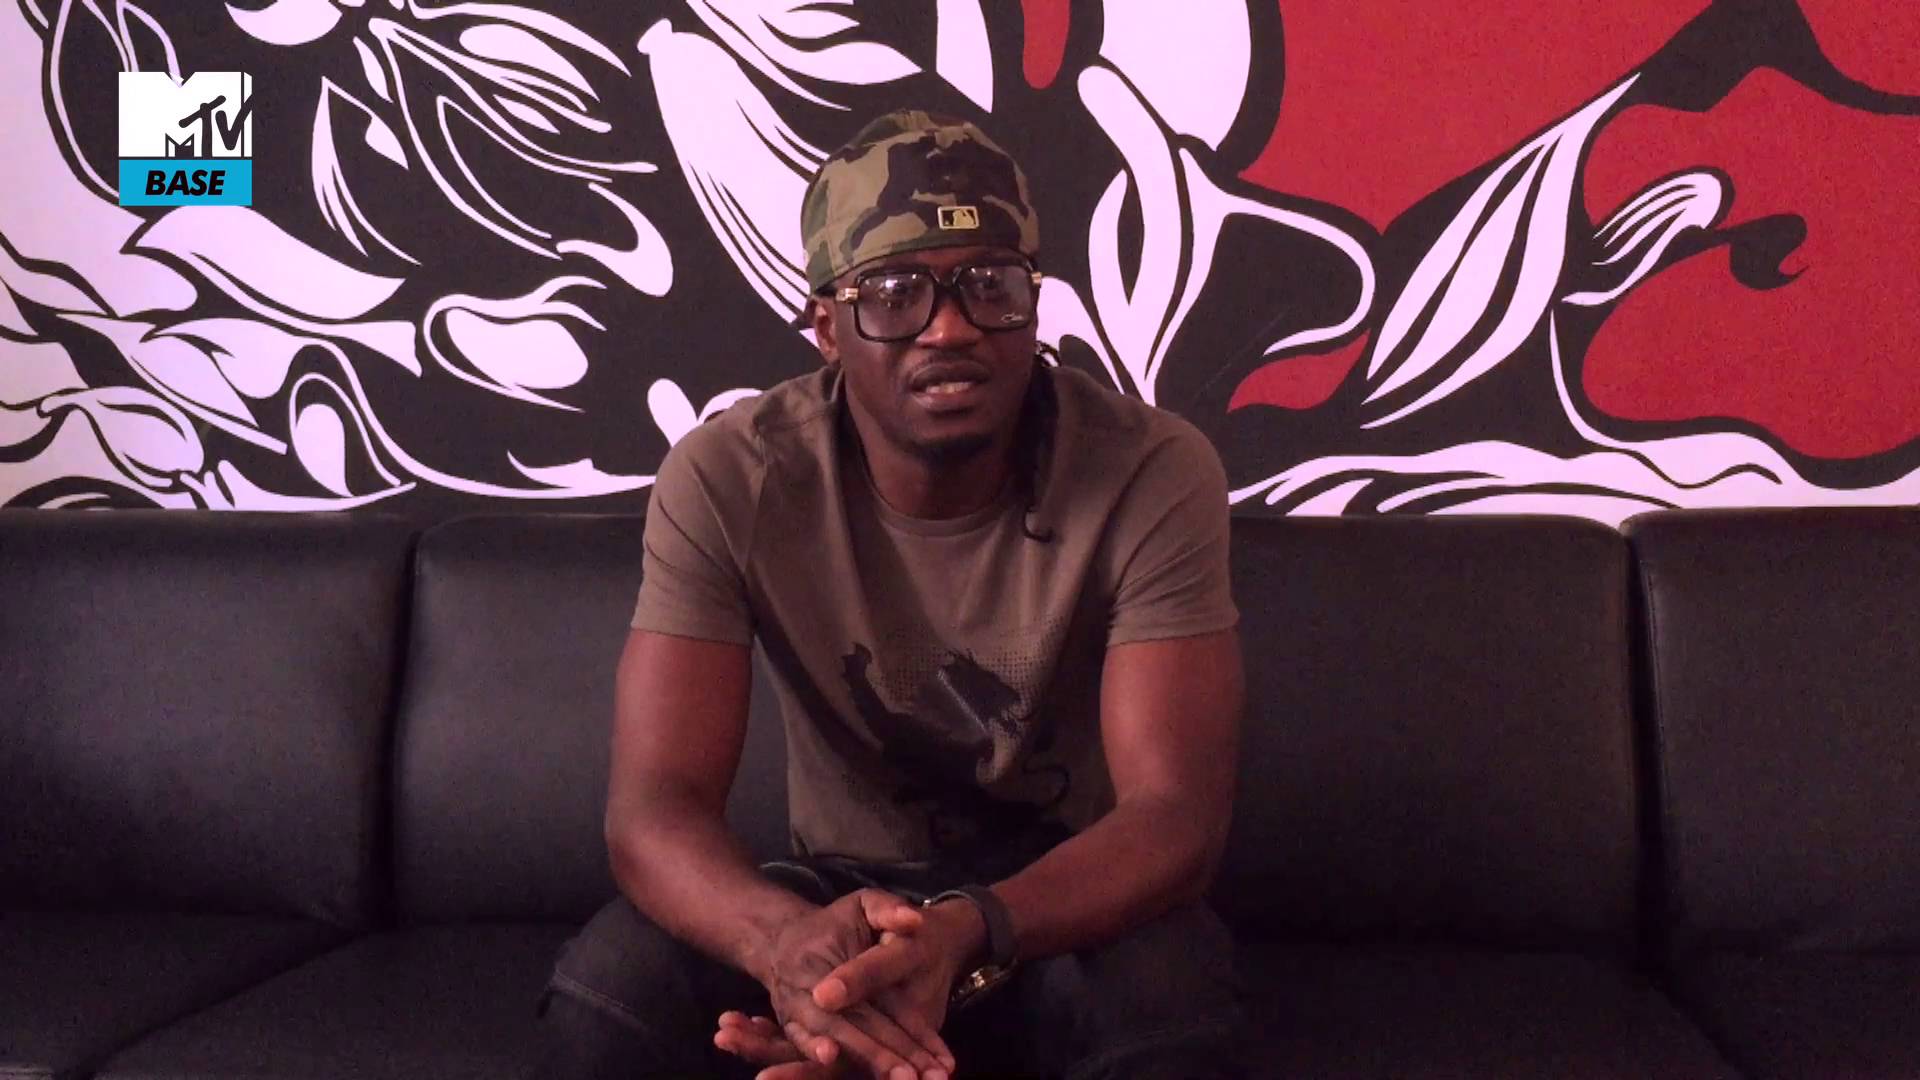 VIDEO: Paul Okoye (P-Square) Interview on MTVBase